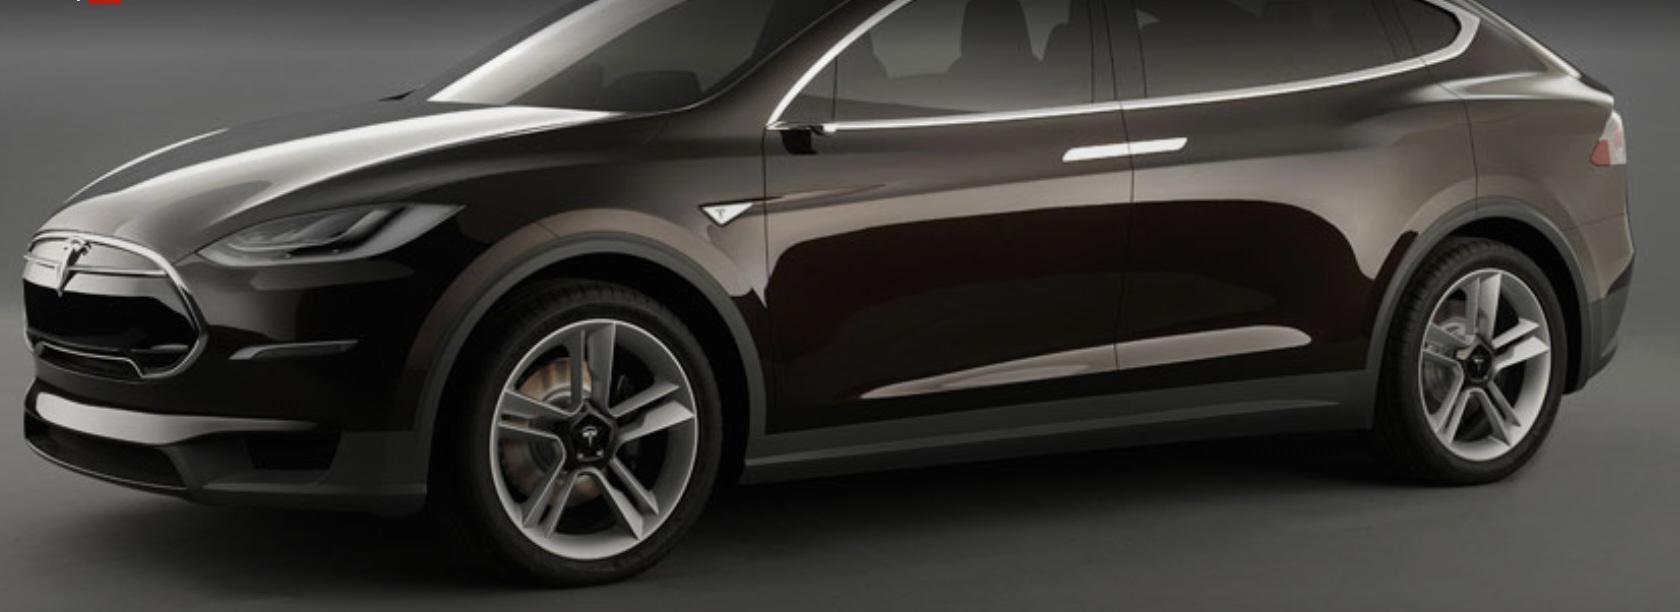 Exclusive Peek Inside Tesla's Model S and Model X